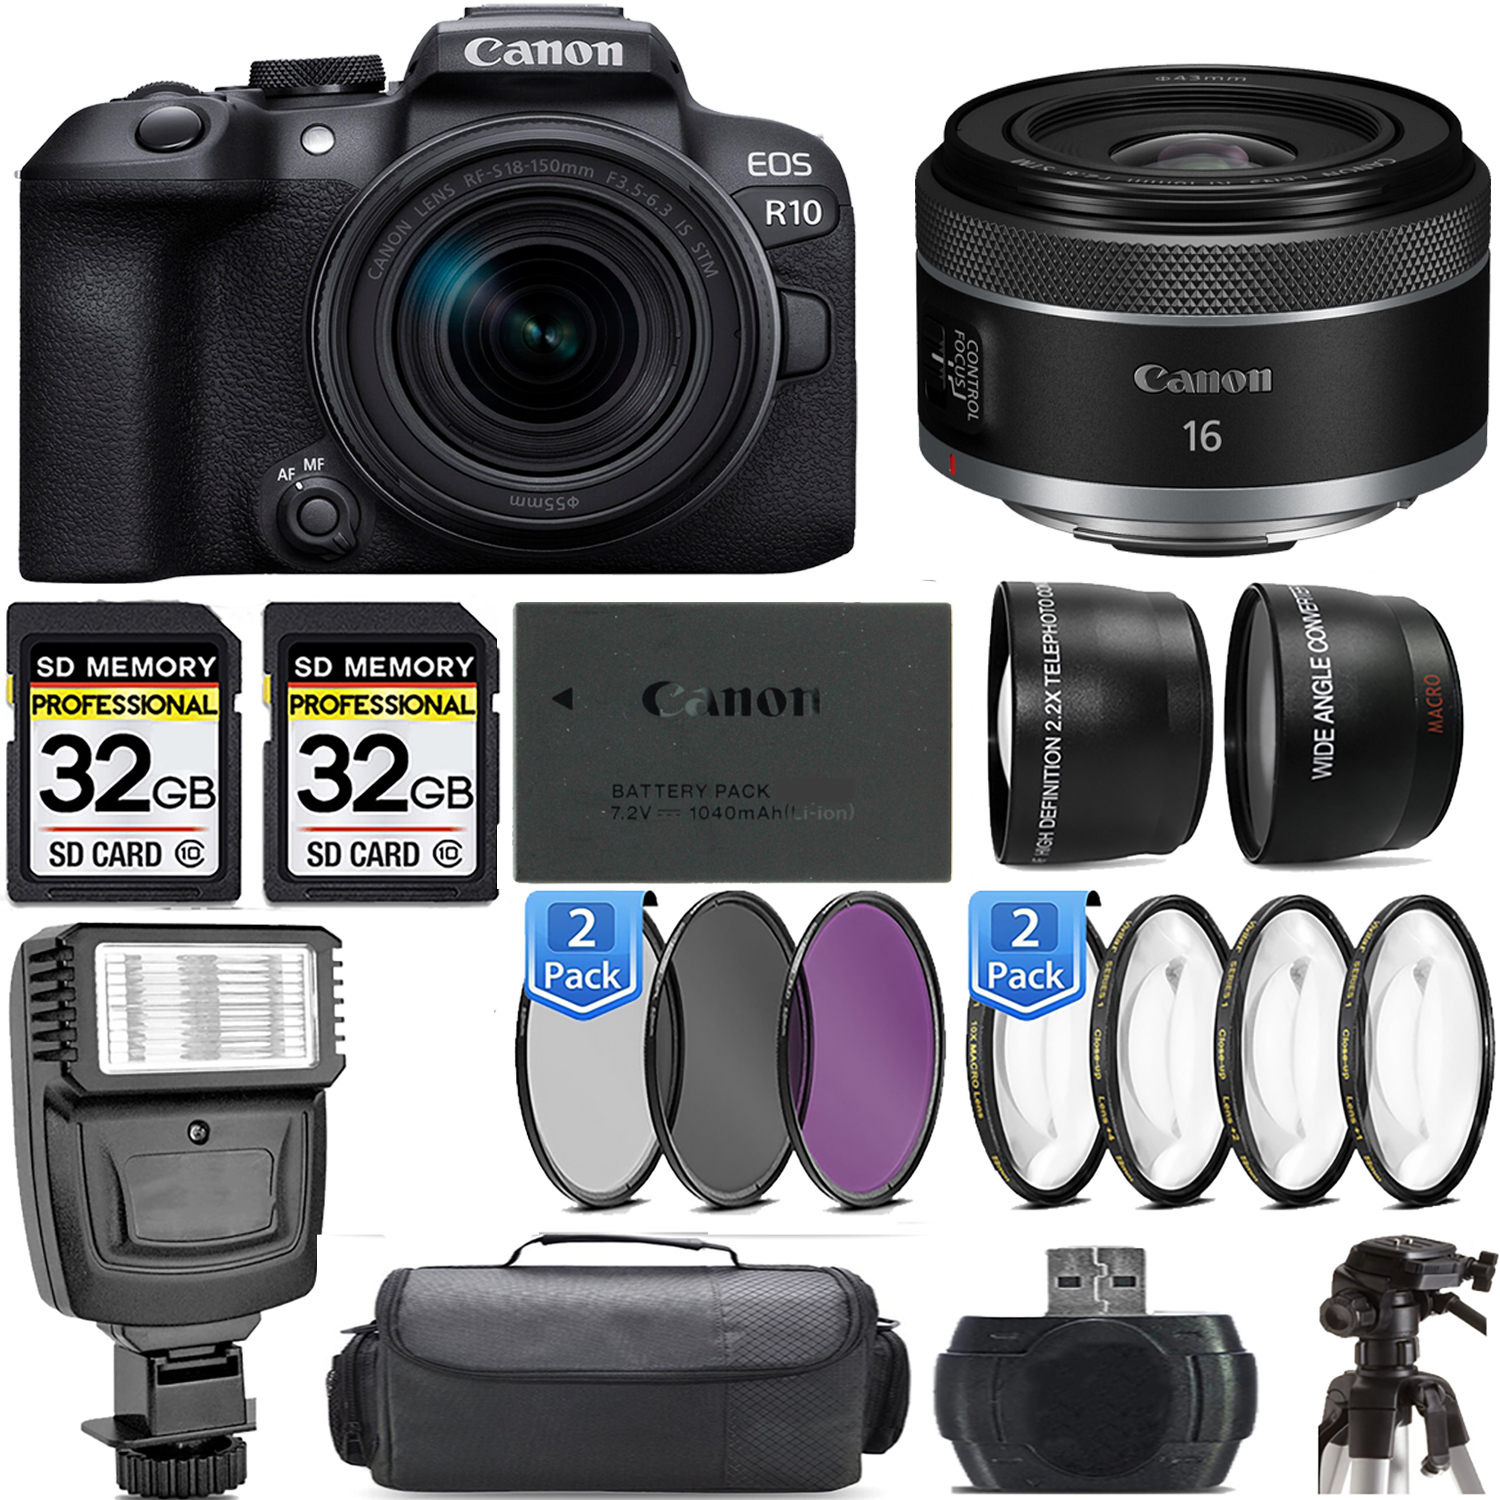 EOS R10 Camera + 18-150mm Lens + 16mm f/2.8 STM Lens + Flash - Kit *FREE SHIPPING*